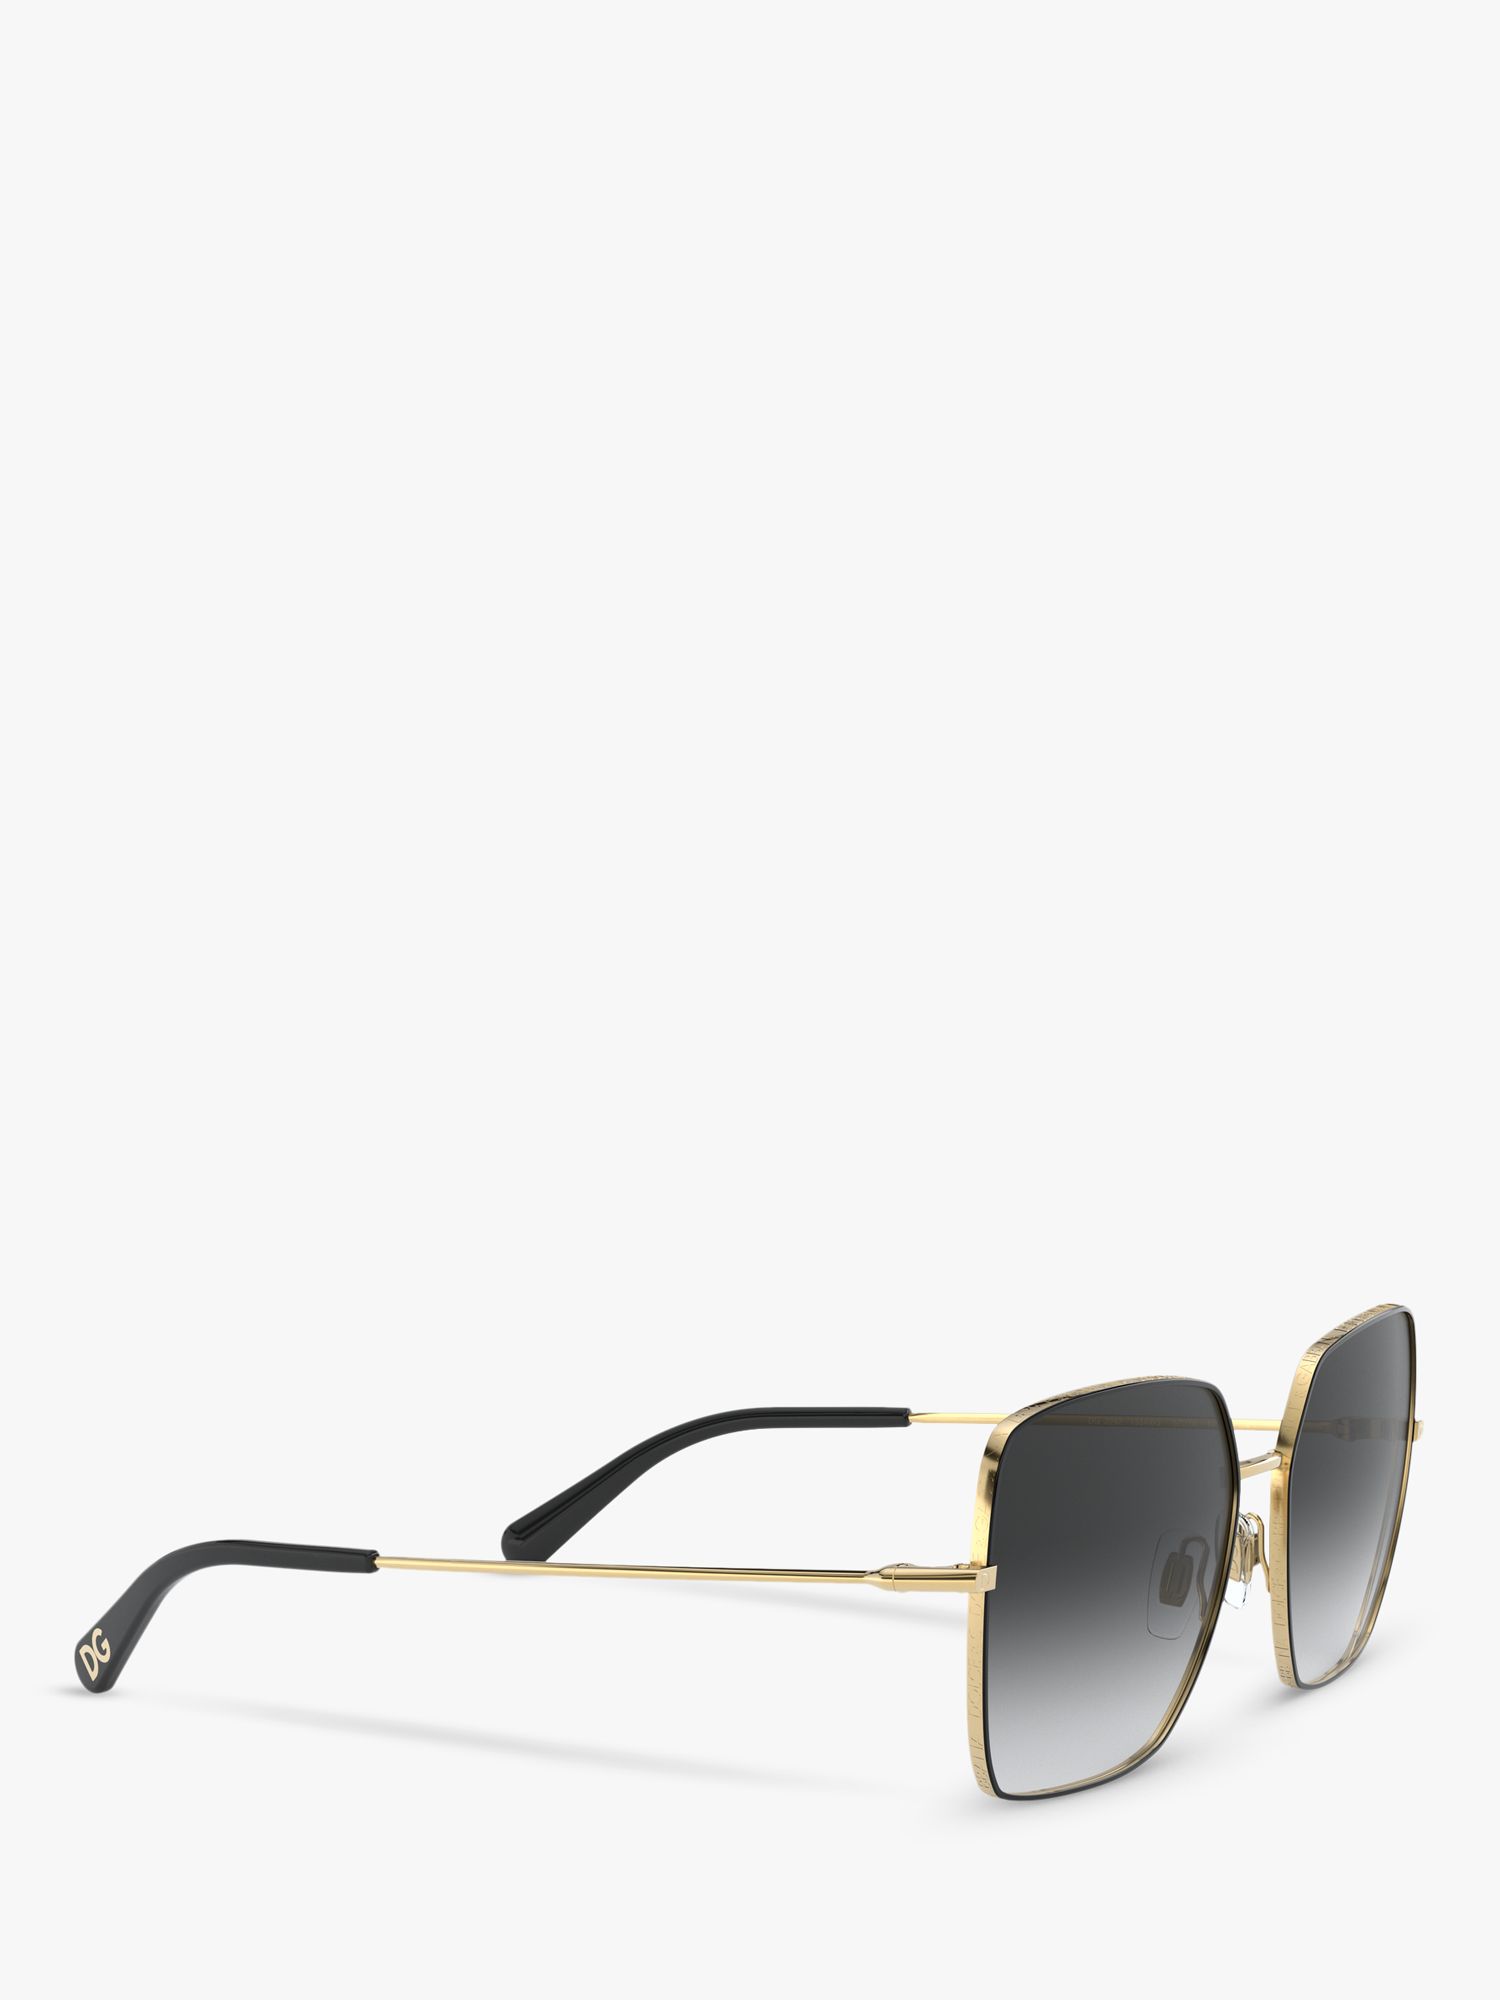 Buy Dolce & Gabbana DG2242 Women's Square Sunglasses Online at johnlewis.com